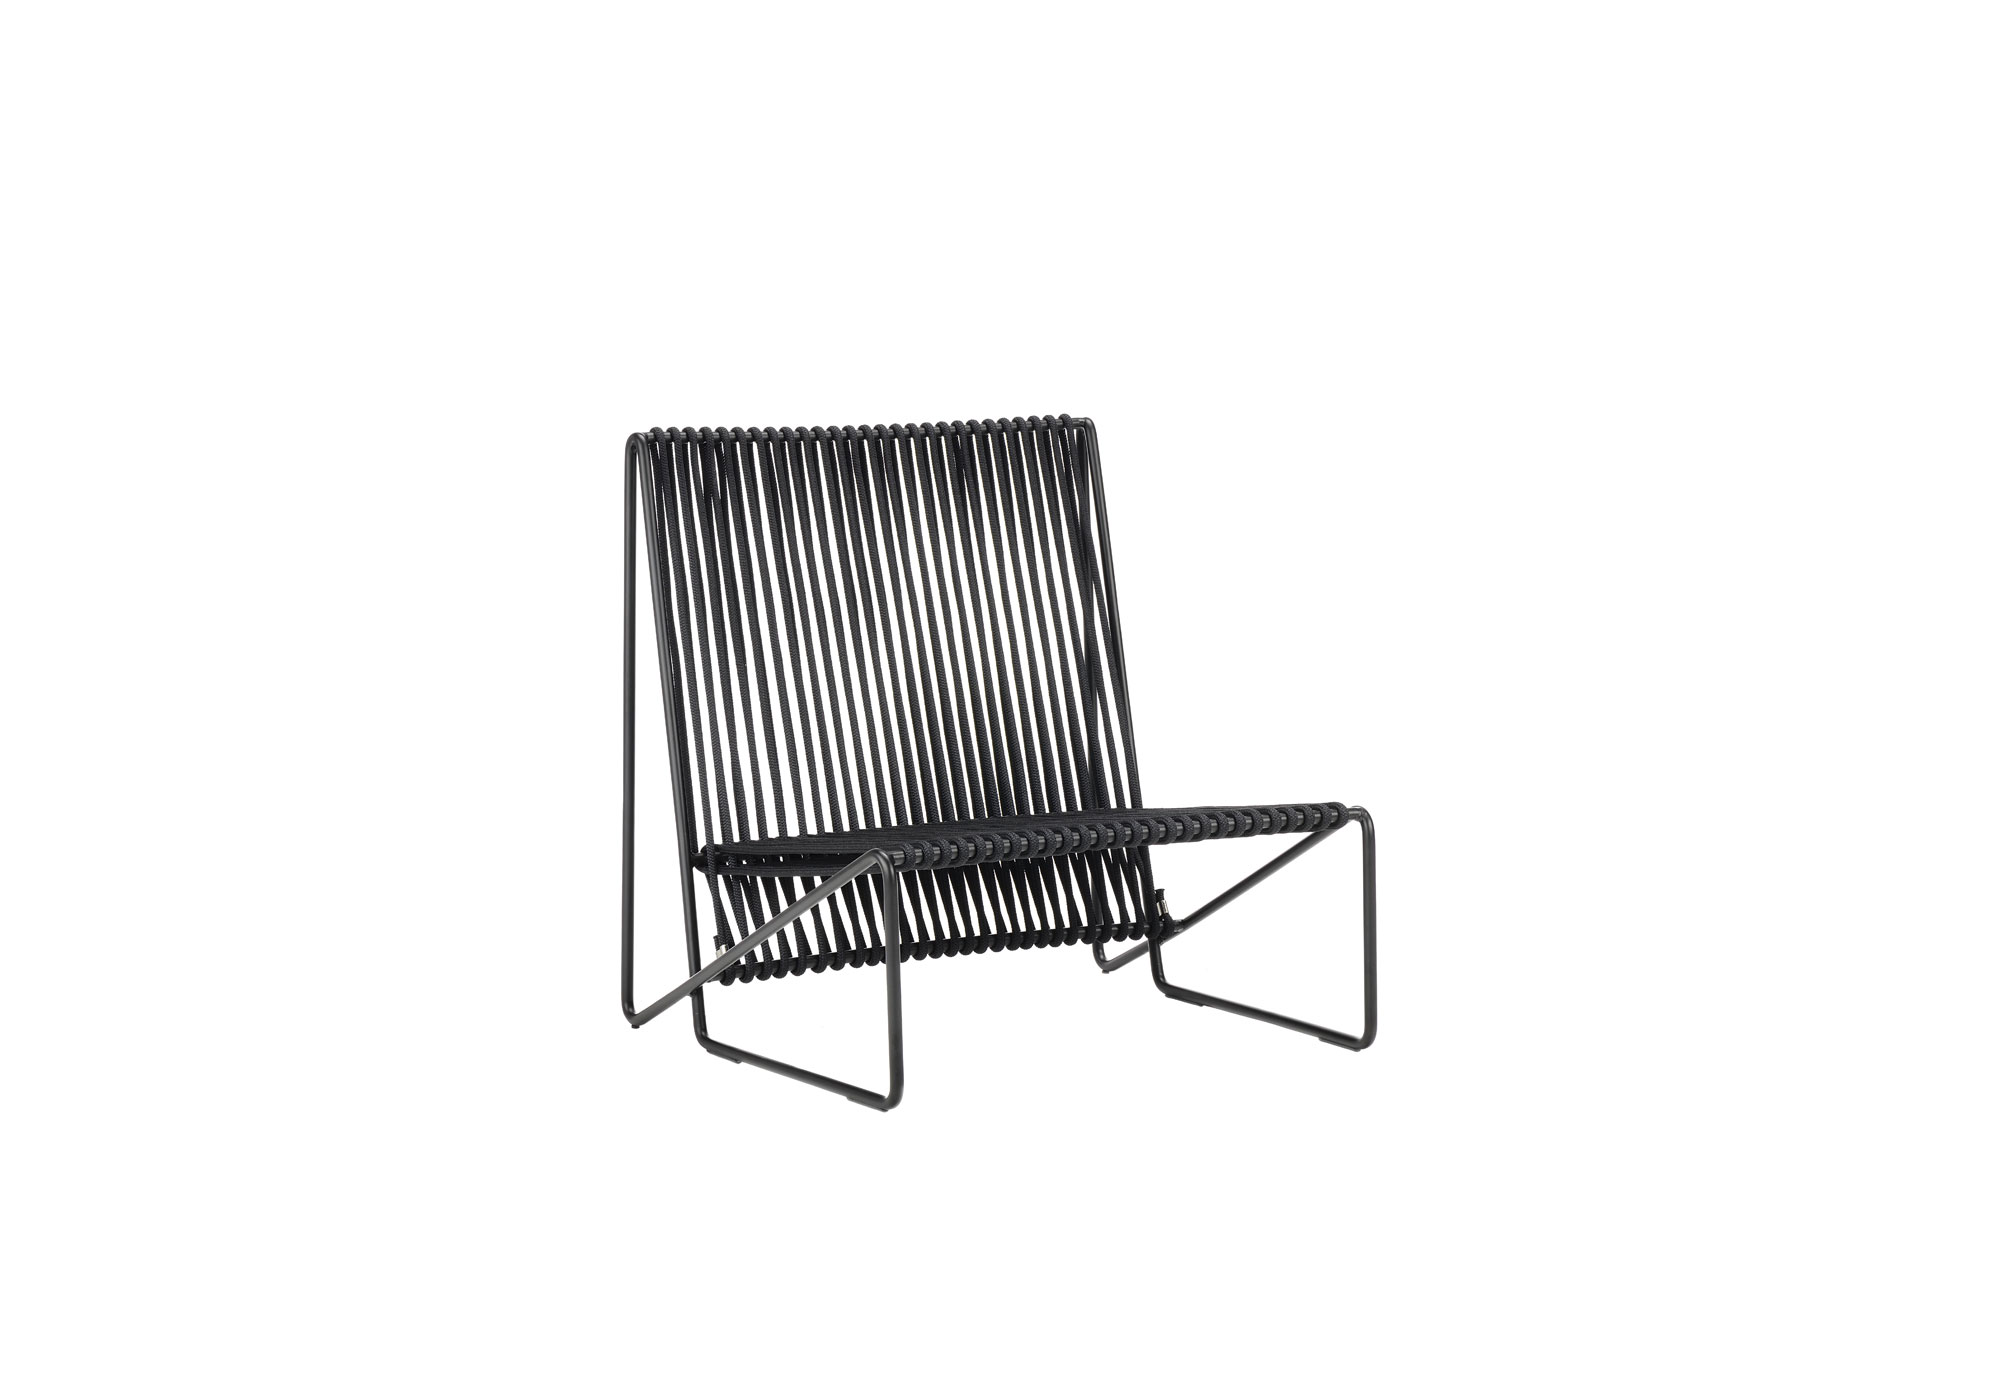 Lounge chair in nautical rope by Altek Italia Design